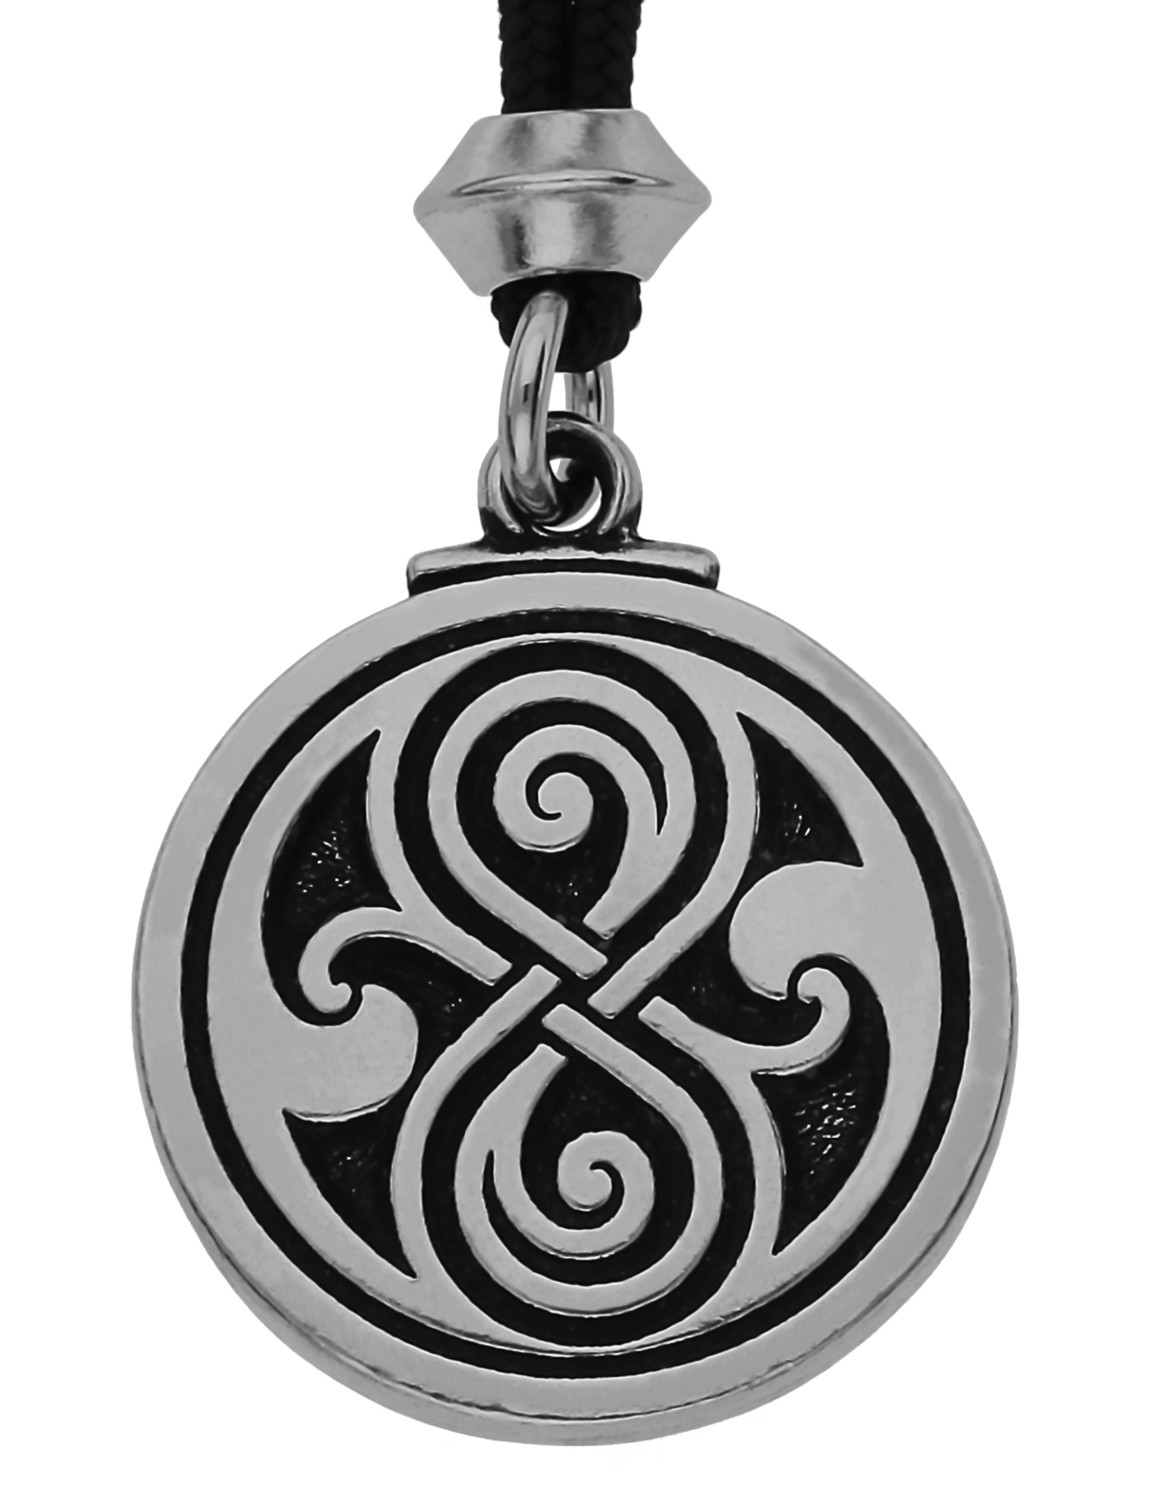 The Seal of Rassilon Handmade Pewter Pendant